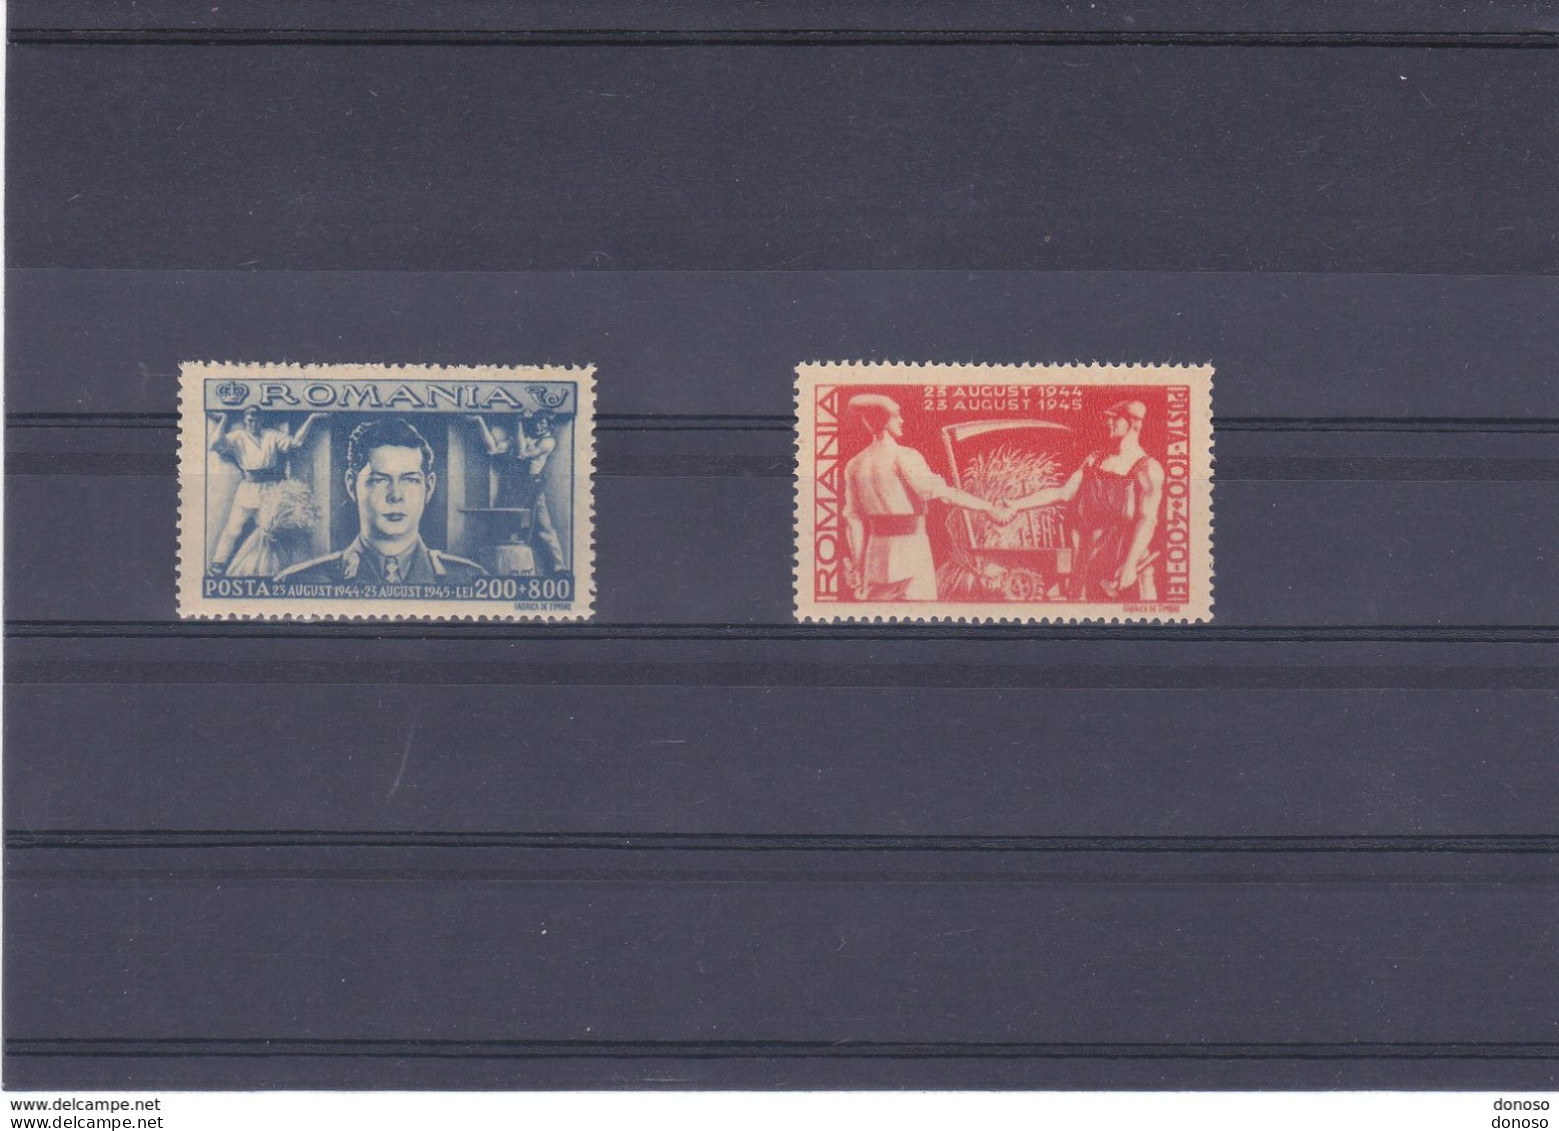 ROUMANIE 1945 LIBERATION Yvert 867-868, Michel 898-899 NEUF** MNH - Unused Stamps